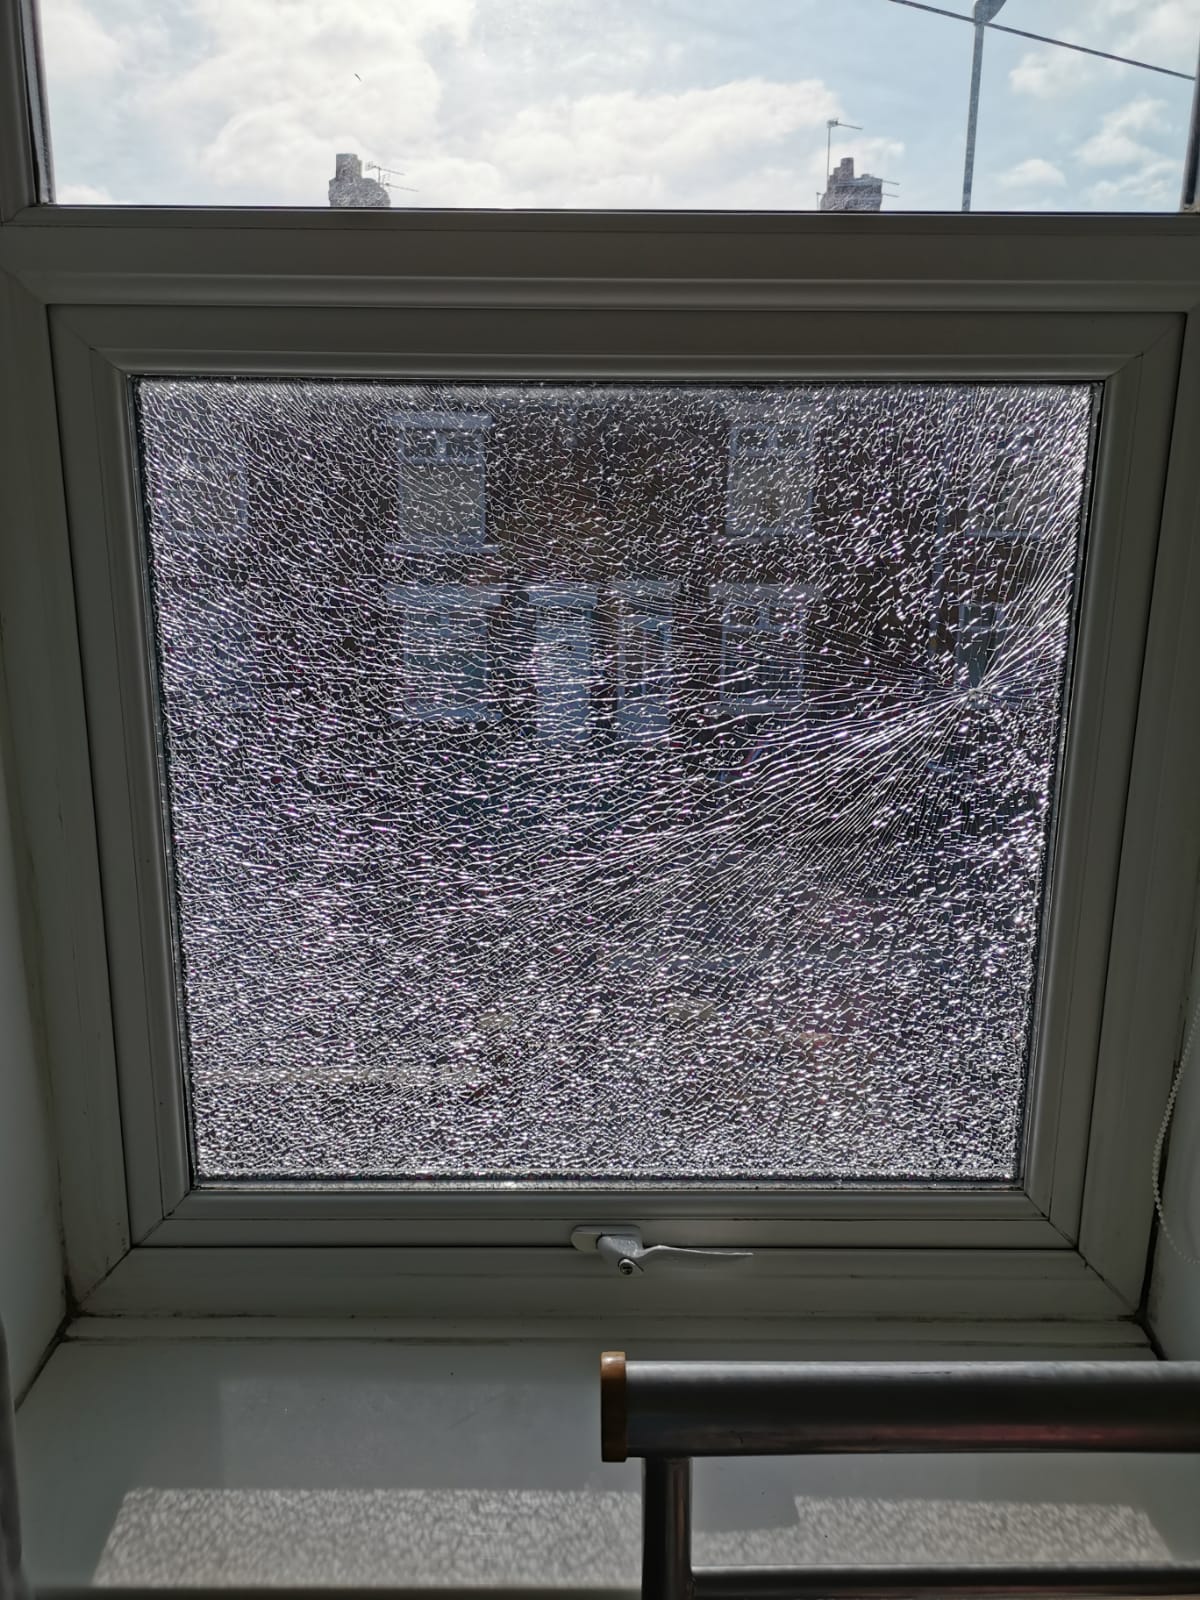 Broken window replacement north shields